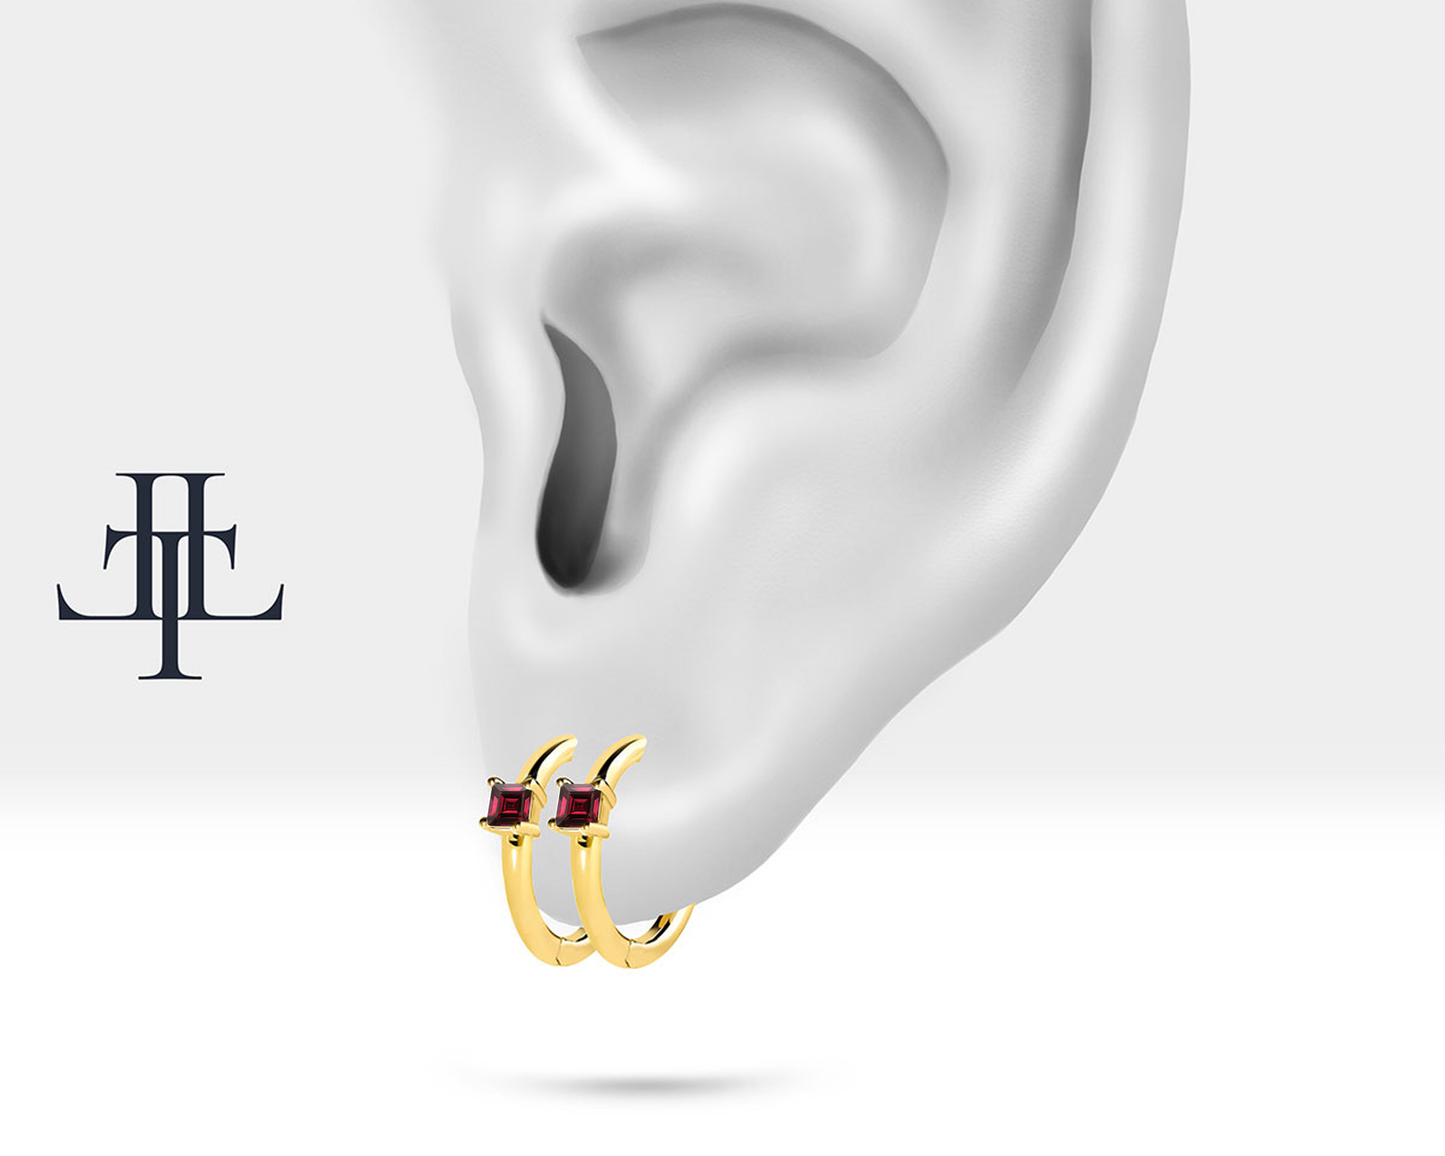 Huggies Hoop with Princess Cut Ruby Earring in 14K Yellow-White-Rose Solid Gold Earlobe Earring 12mm